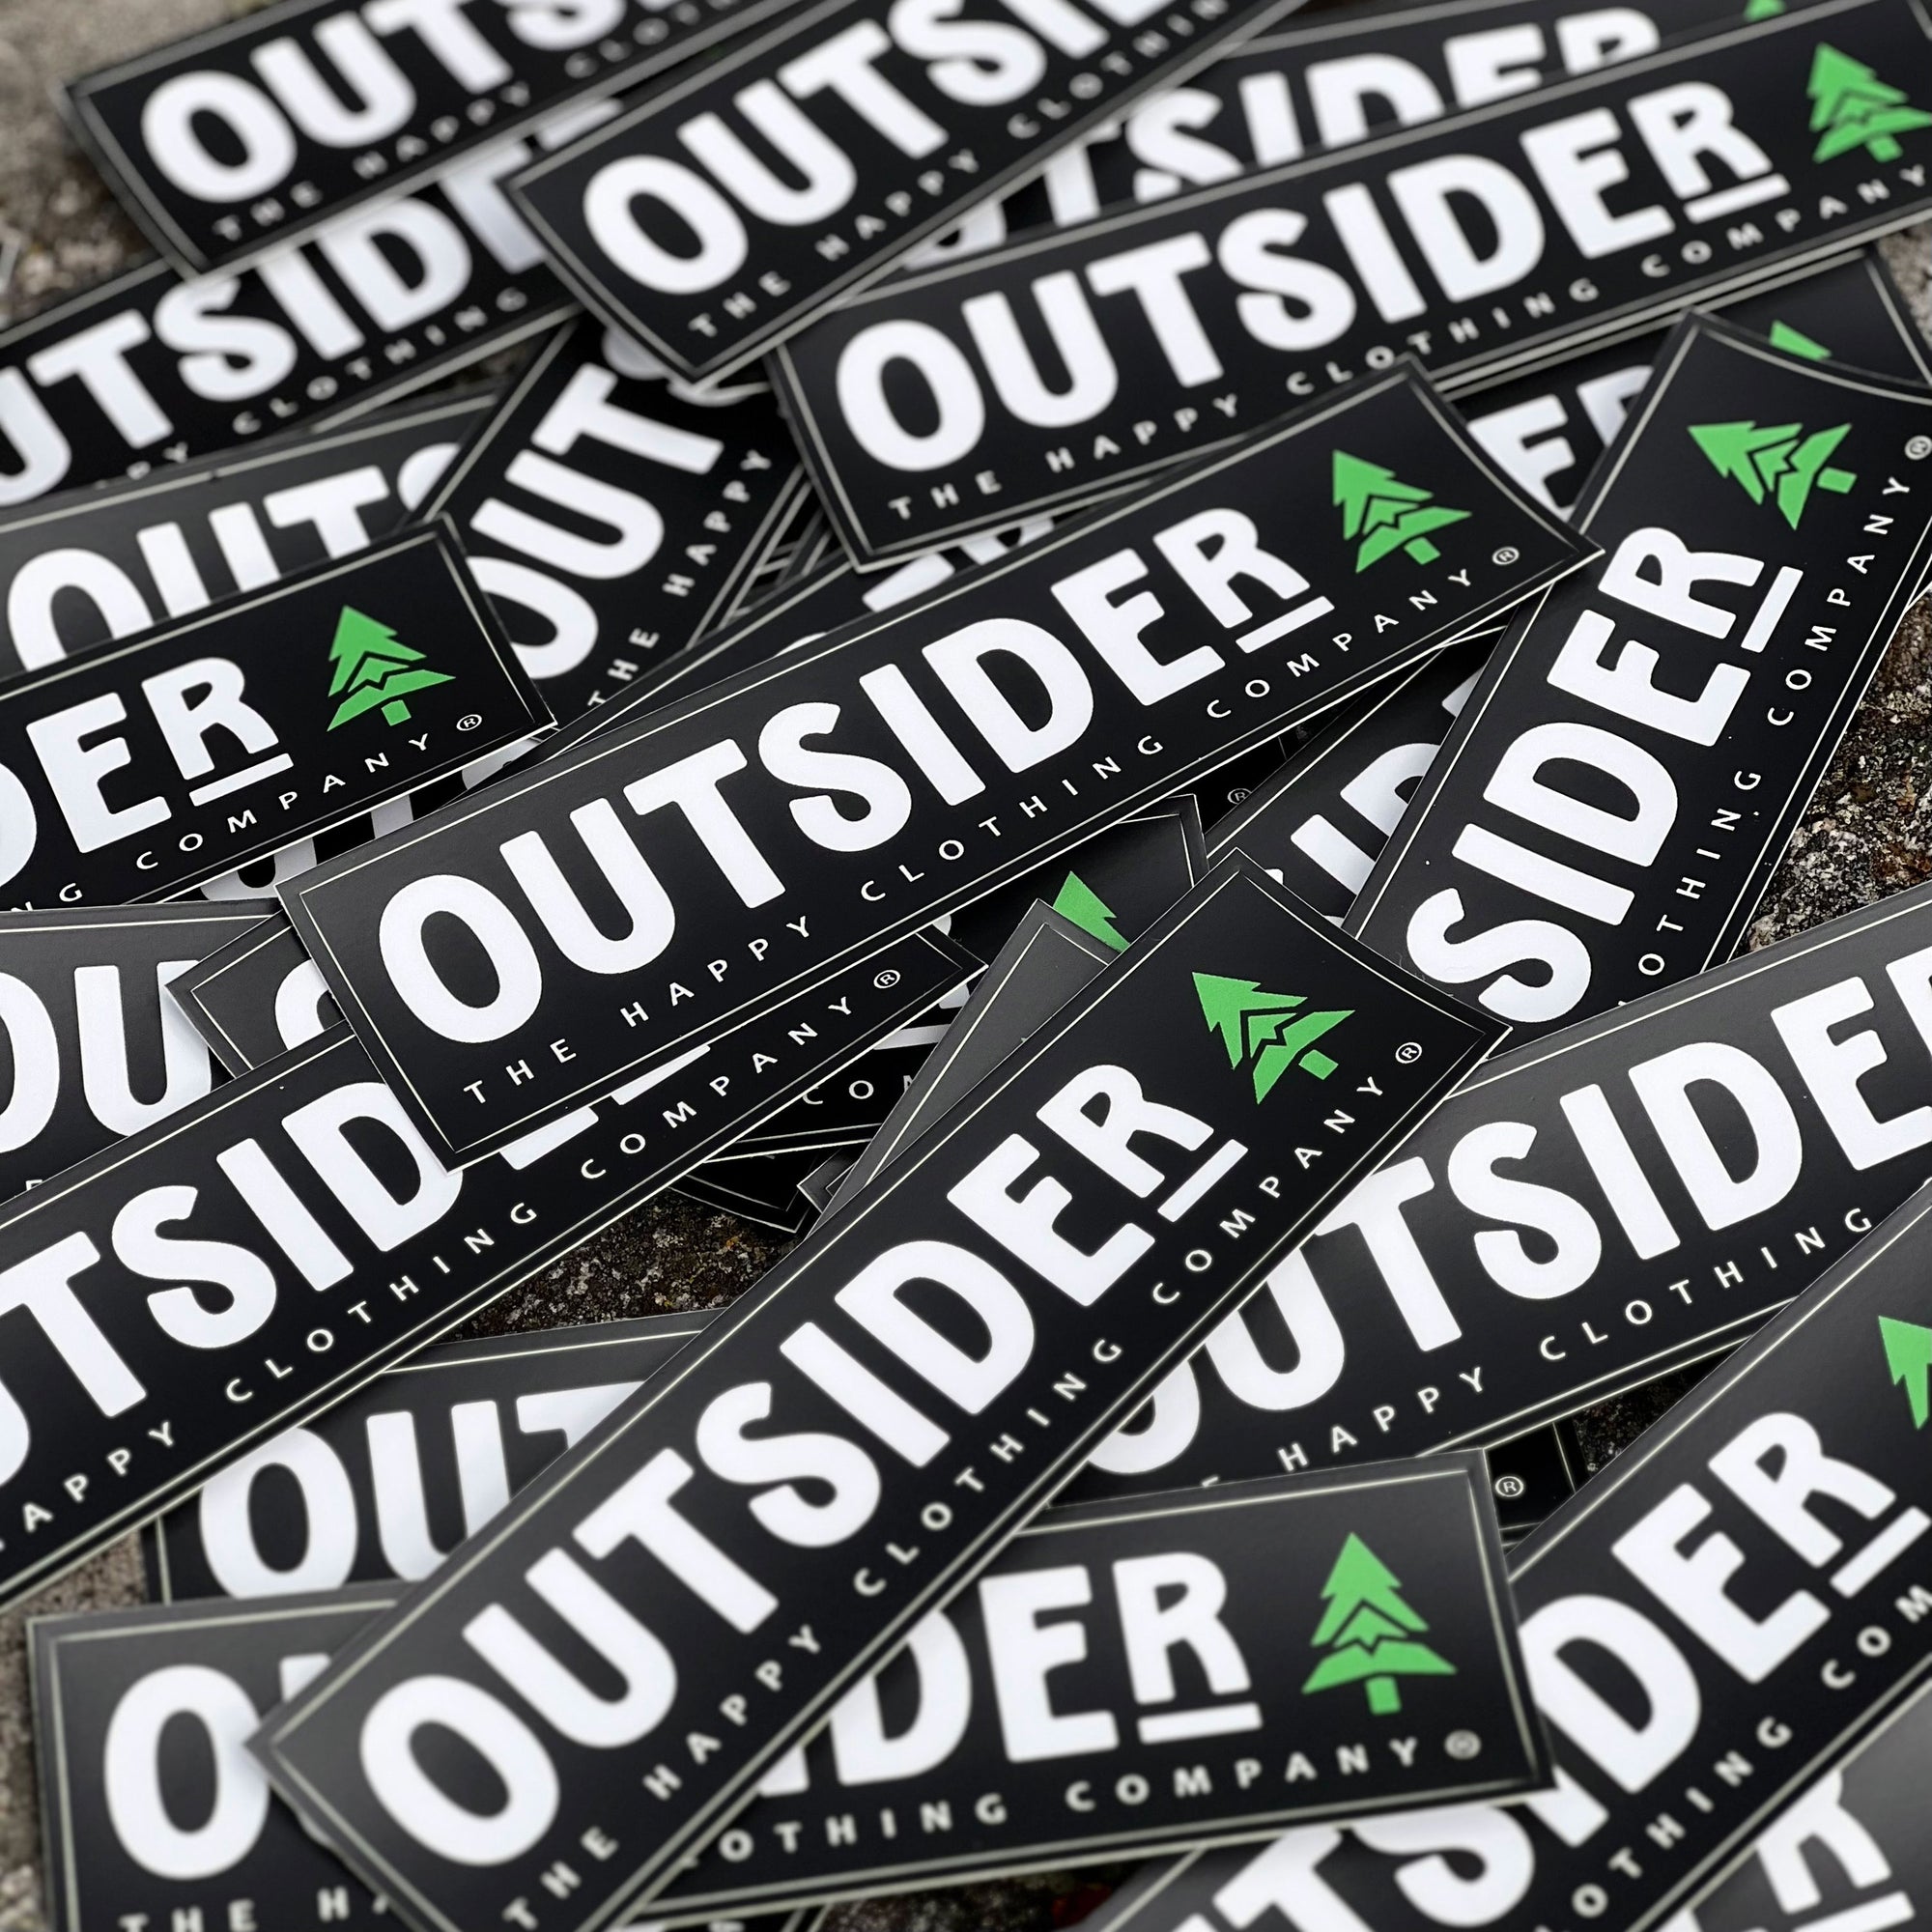 Outsider Sticker